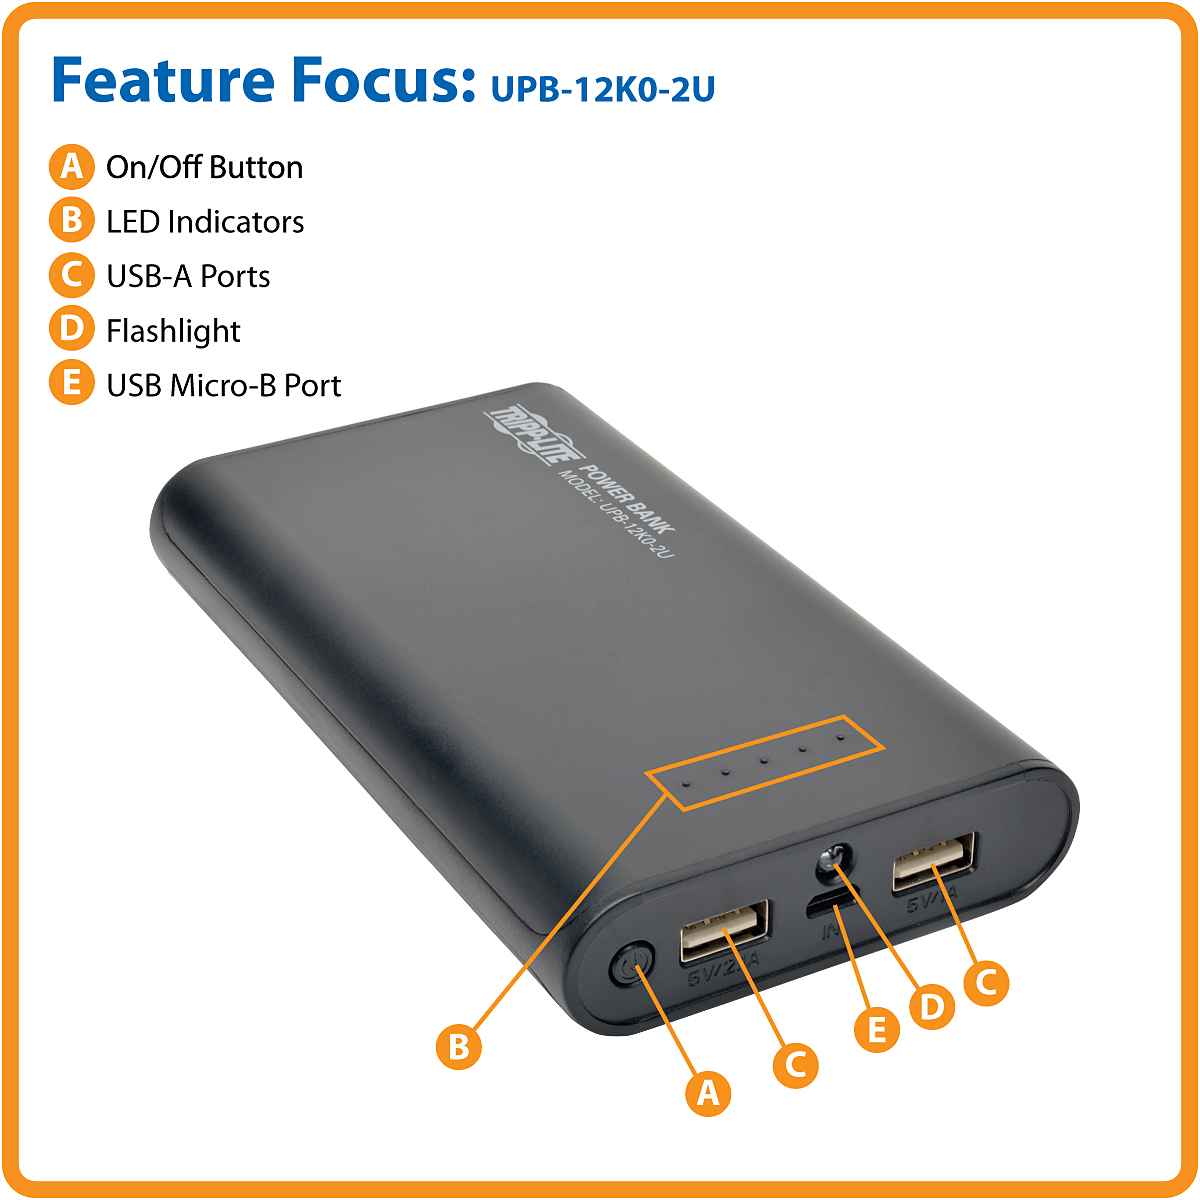 Tripp Lite Portable Mobile Power Bank USB Battery Charger power